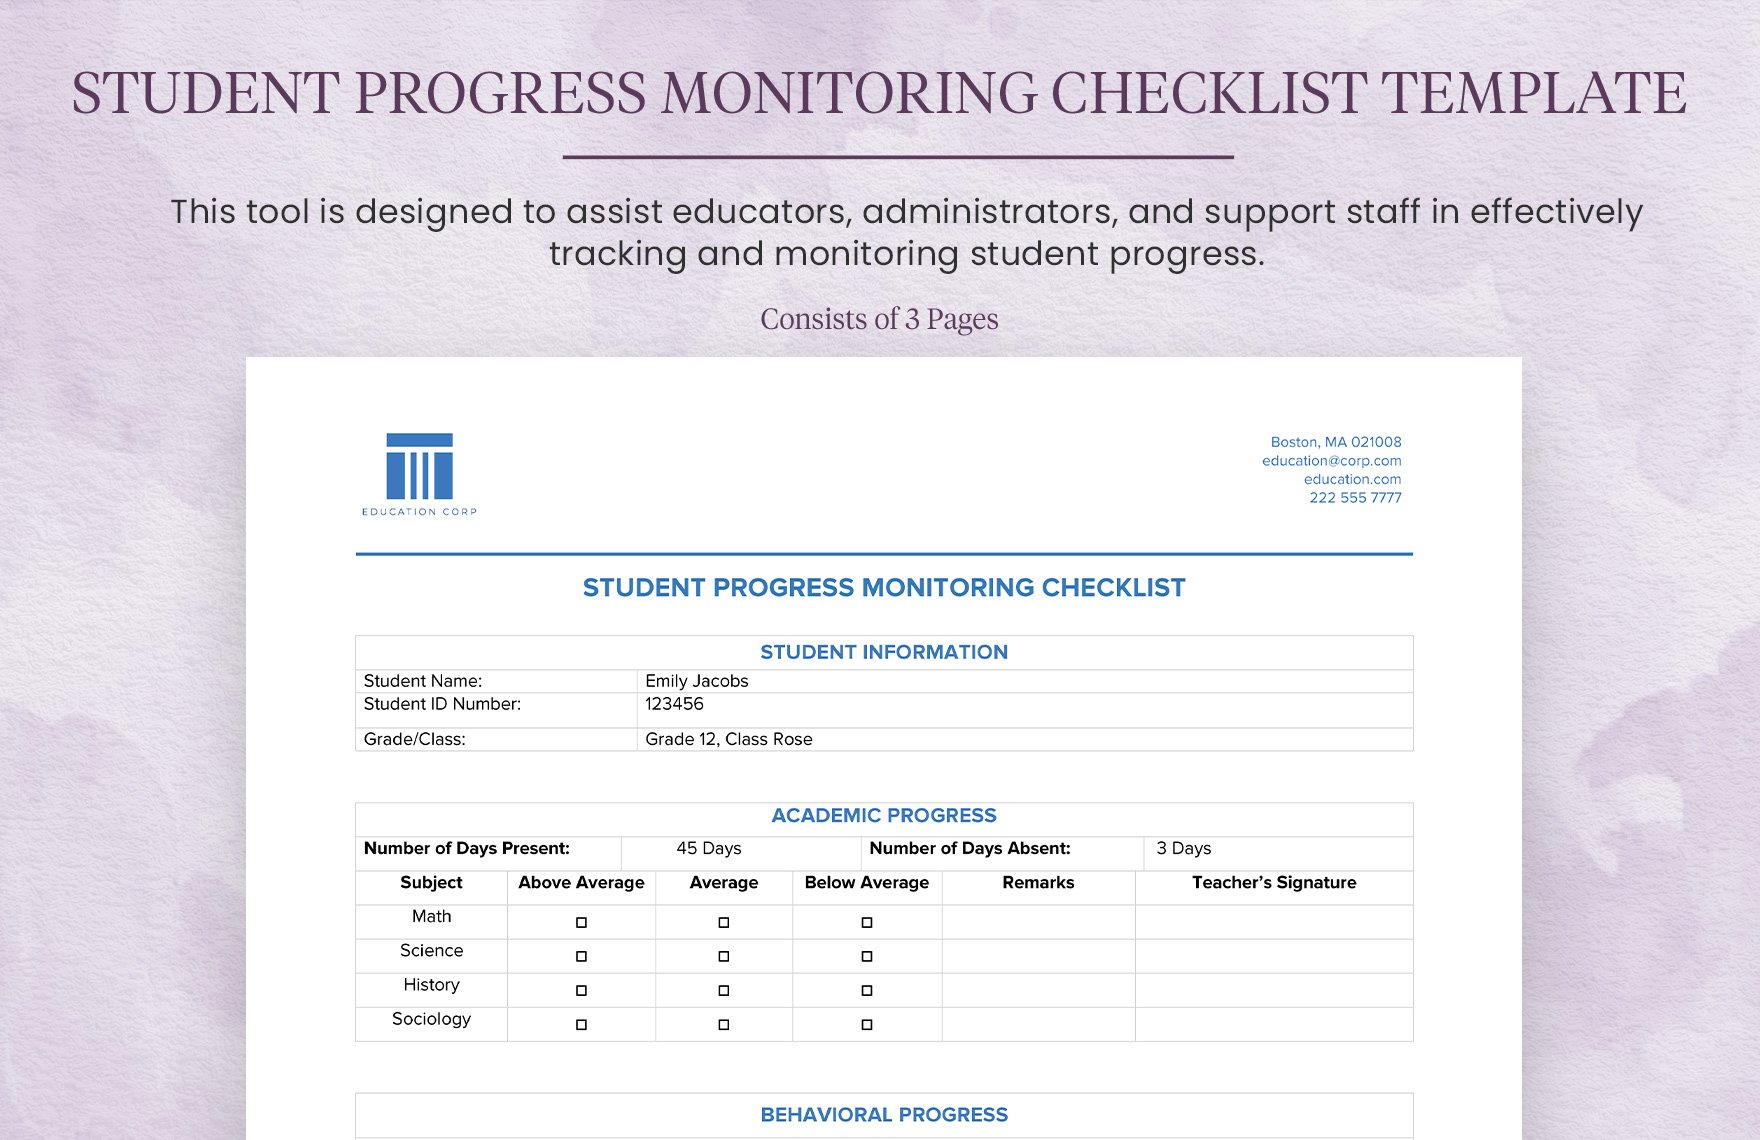 Student Progress Monitoring Checklist Template in Word, Google Docs, PDF